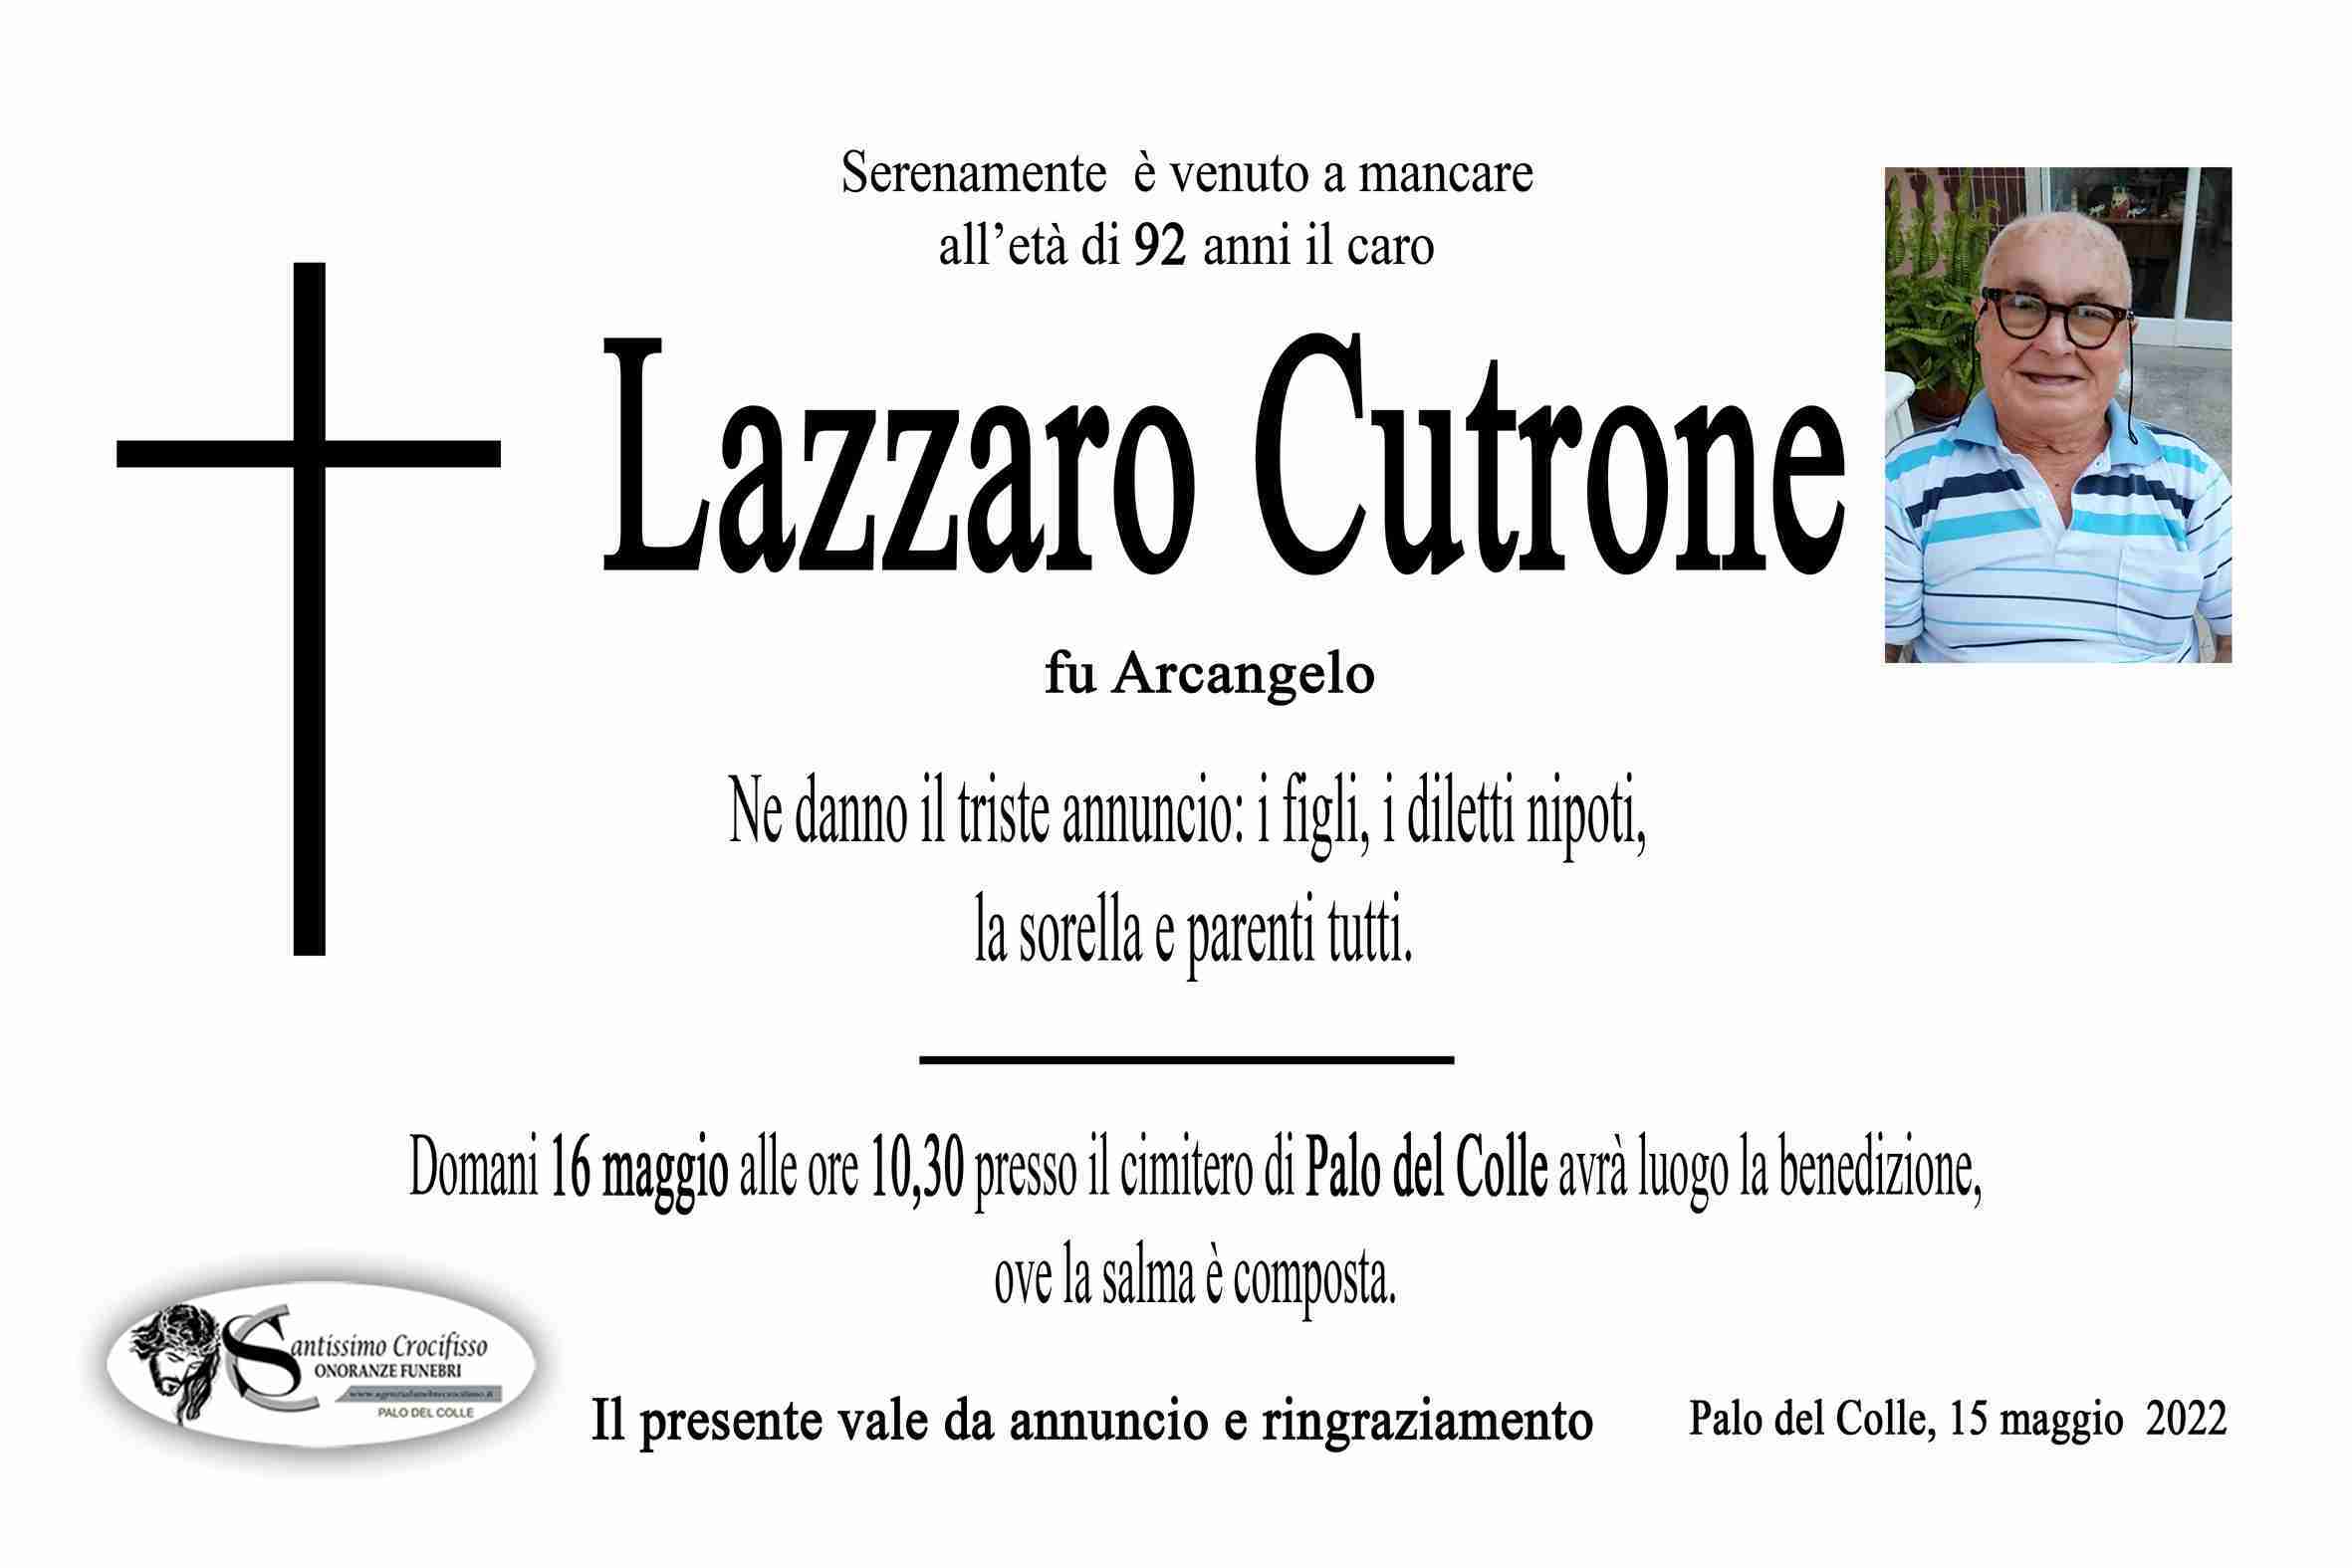 Lazzaro Cutrone